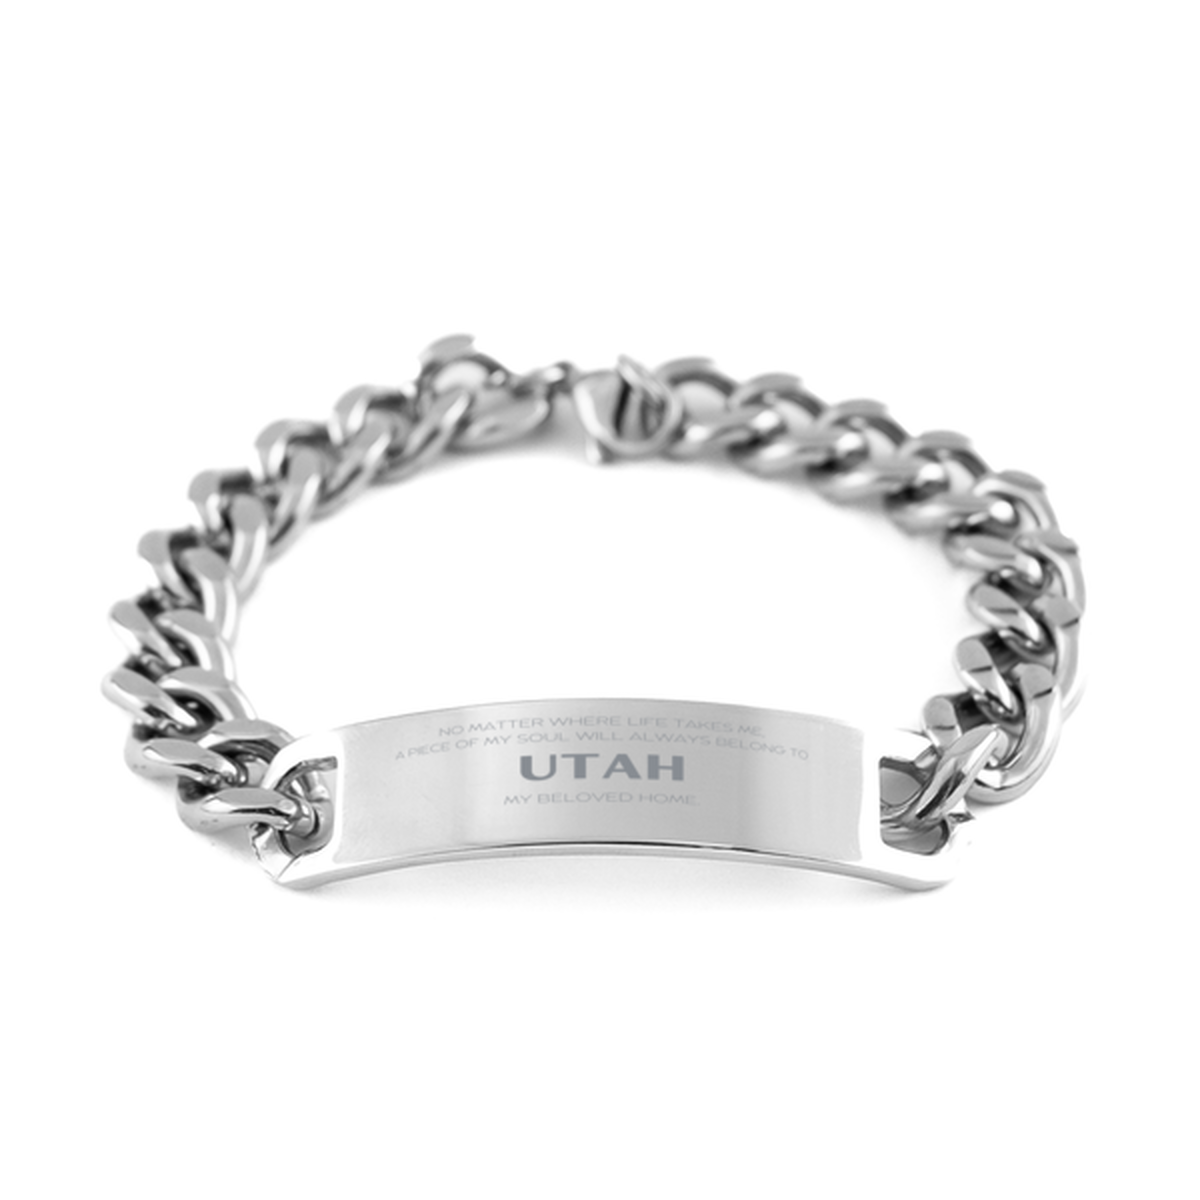 Love Utah State Gifts, My soul will always belong to Utah, Proud Cuban Chain Stainless Steel Bracelet, Birthday Unique Gifts For Utah Men, Women, Friends